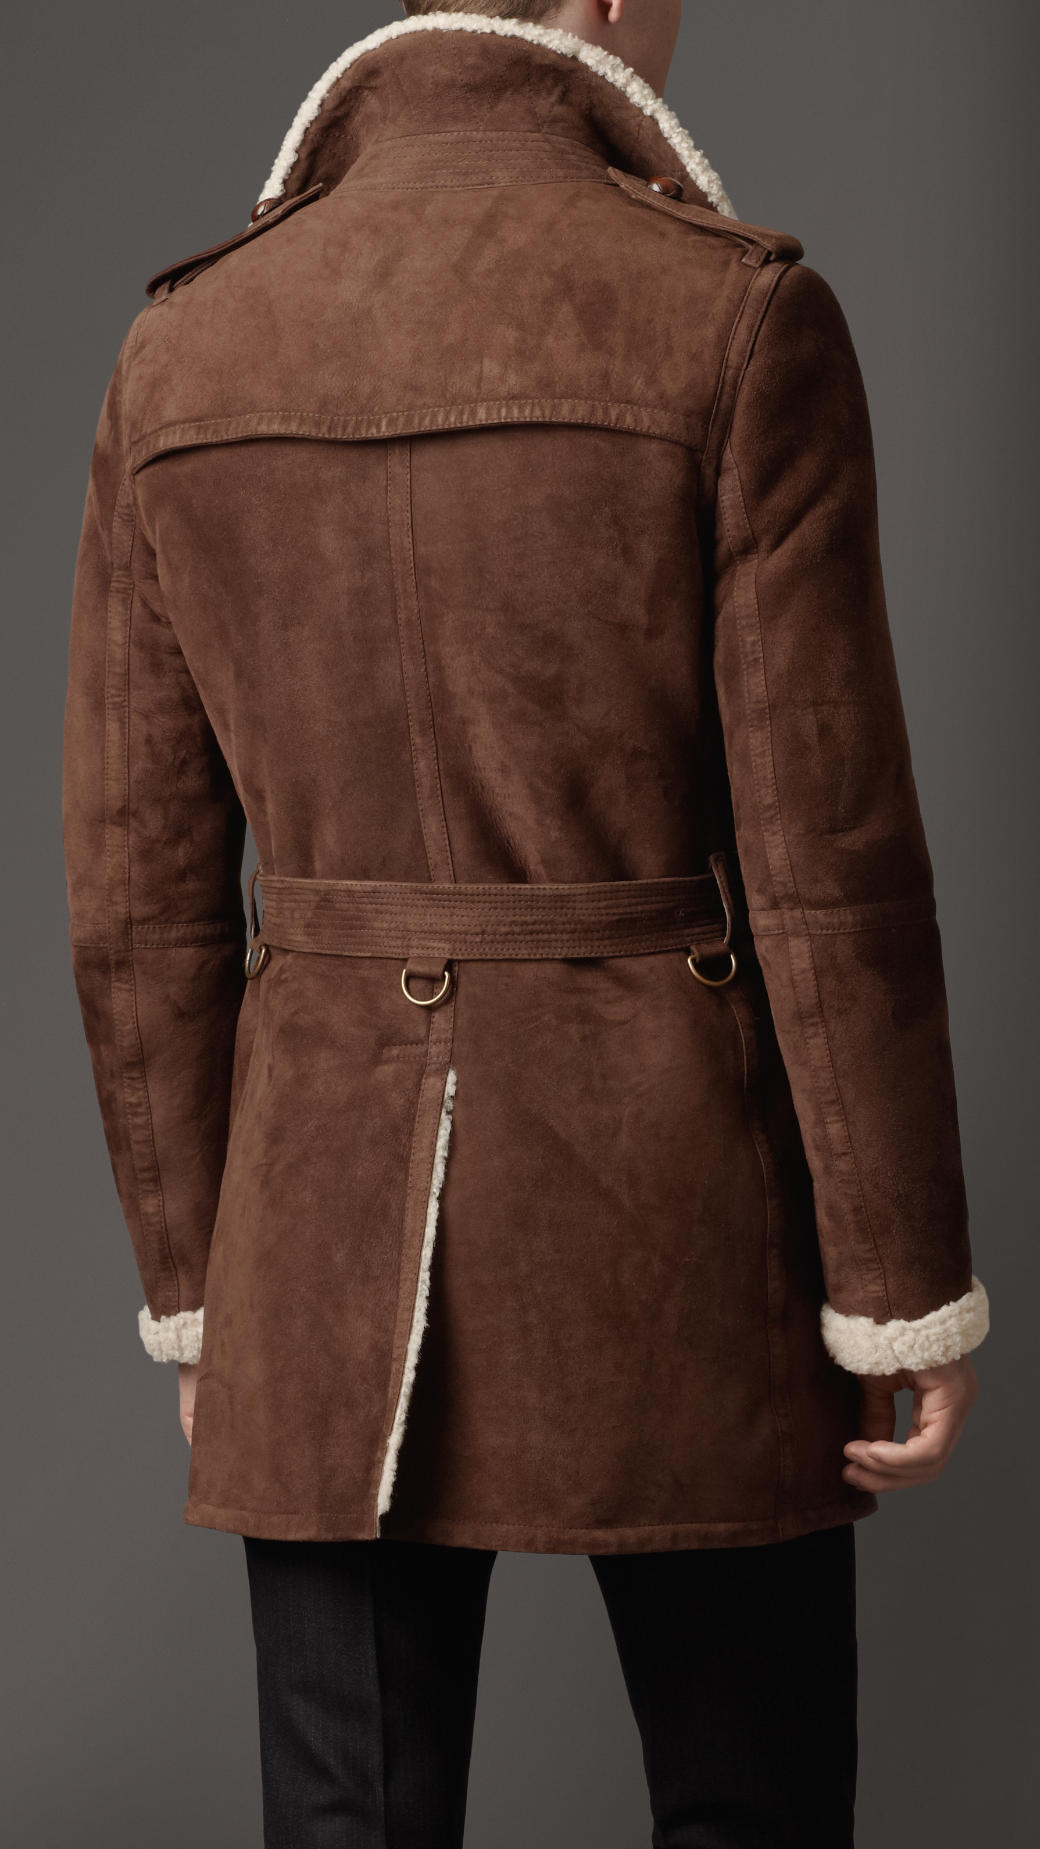 Lyst - Burberry Heritage Sheepskin Coat in Brown for Men